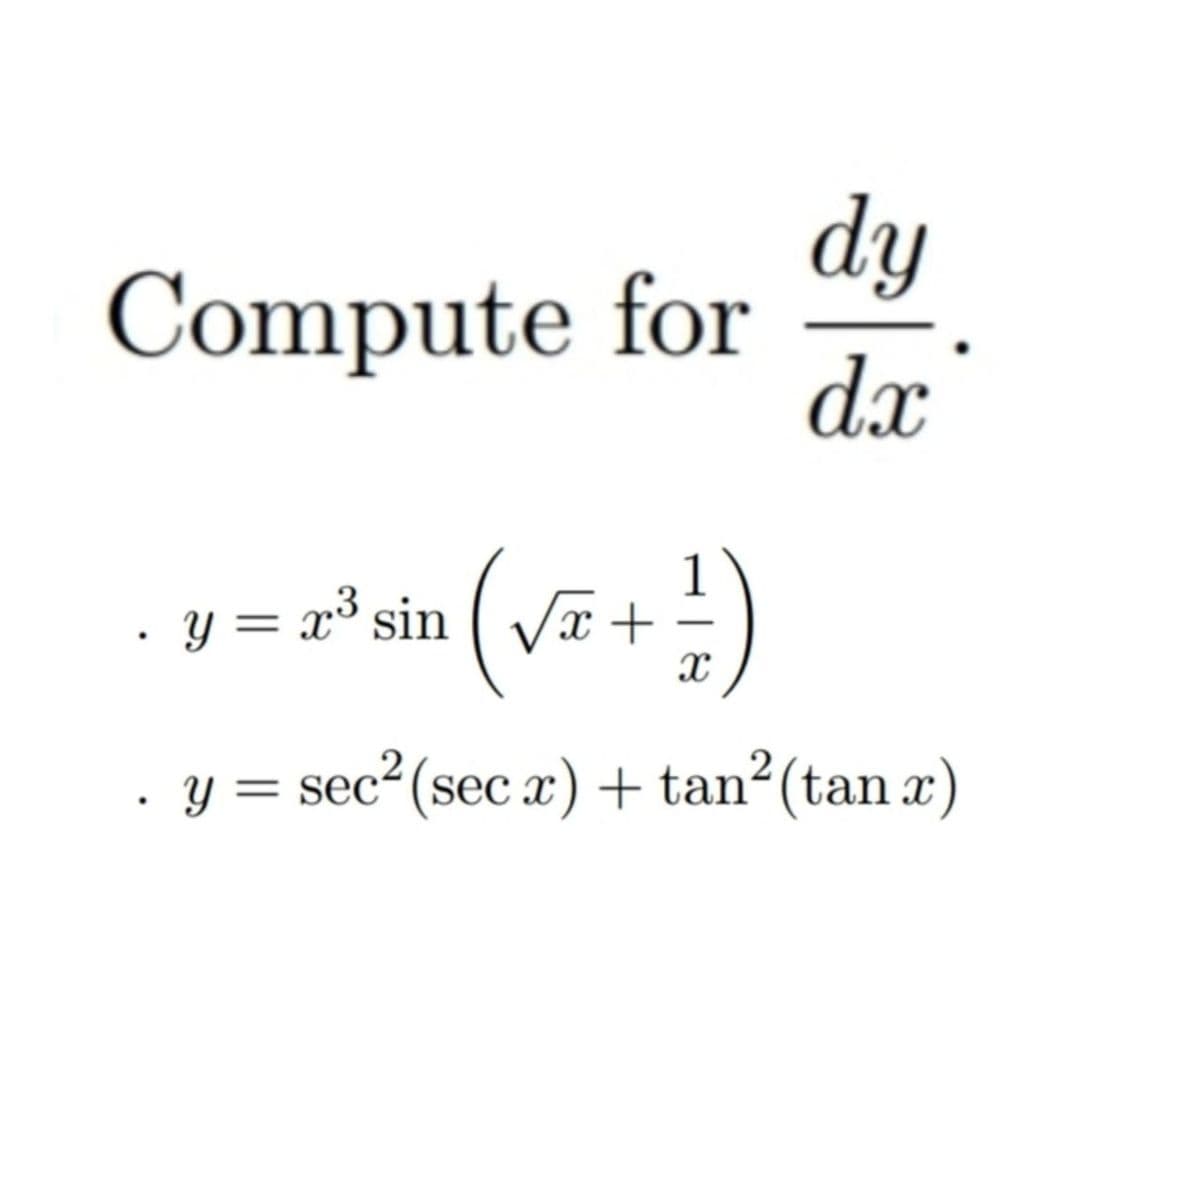 Compute for
y = x3 sin (Væ +
•
(vi+1)
.
dy
d.x
y = sec² (sec x) + tan² (tan x)